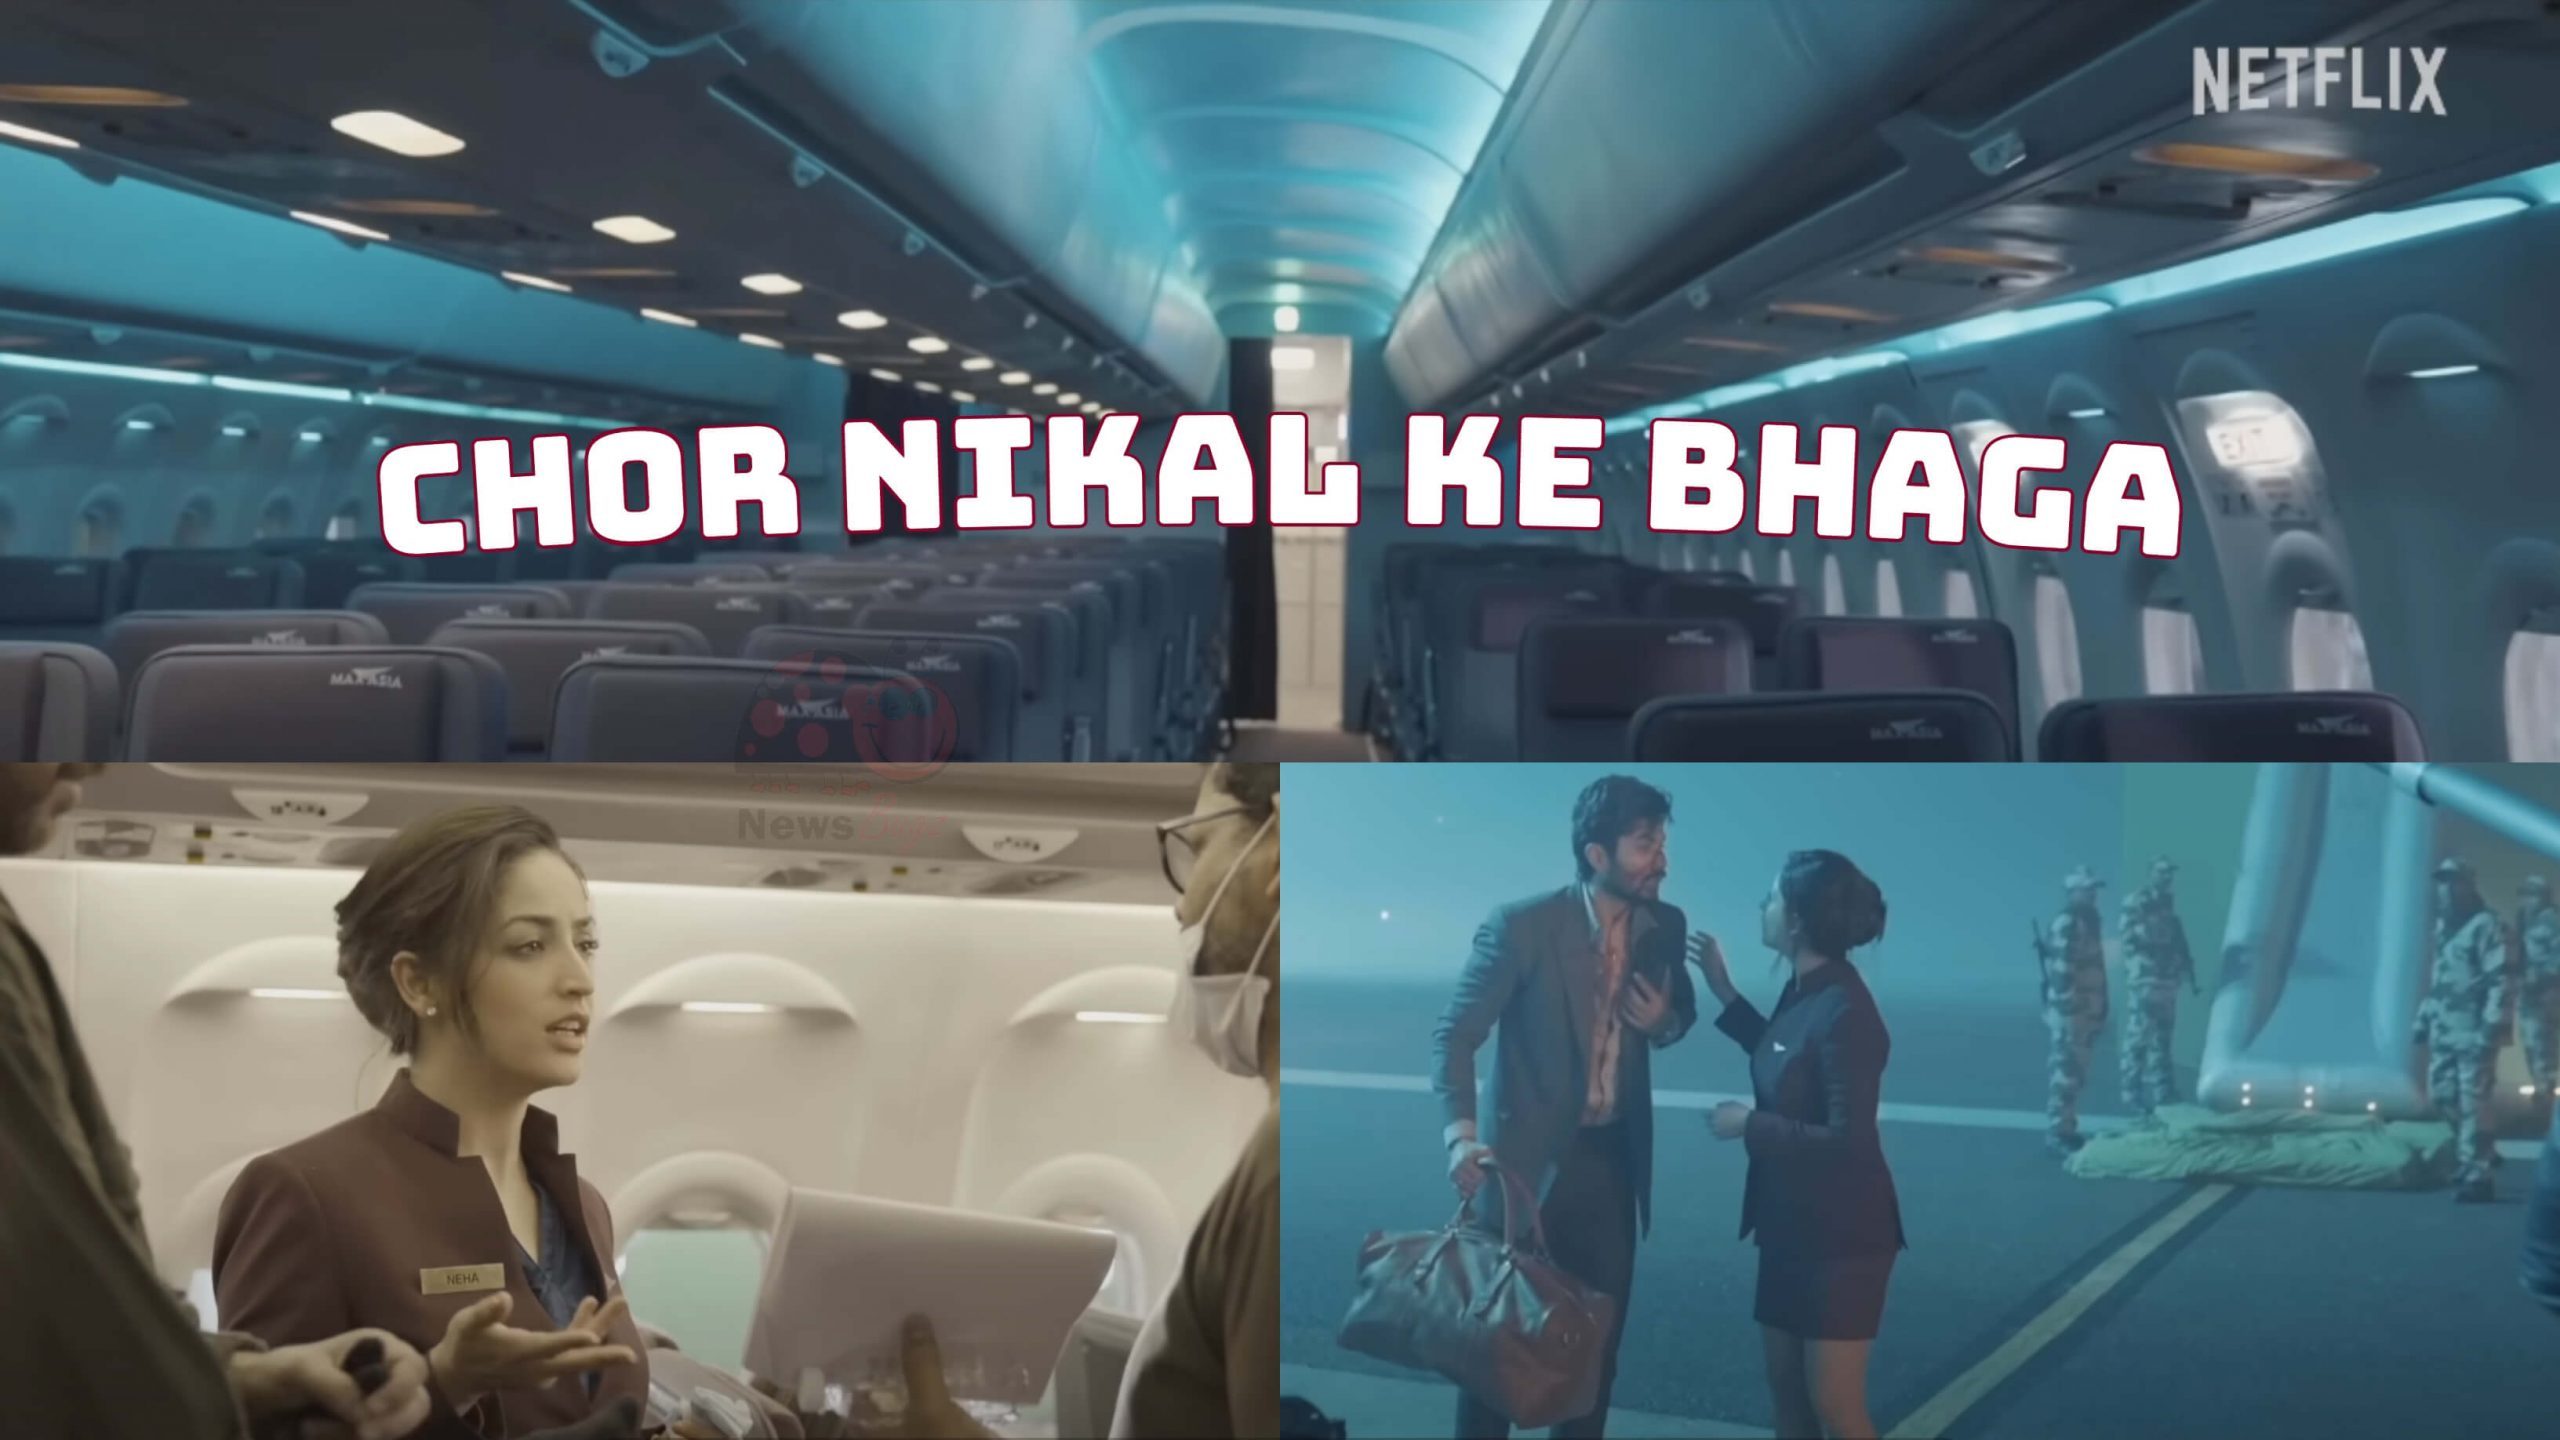 Watch Chor Nikal Ke Bhaga Movie Online On Netflix